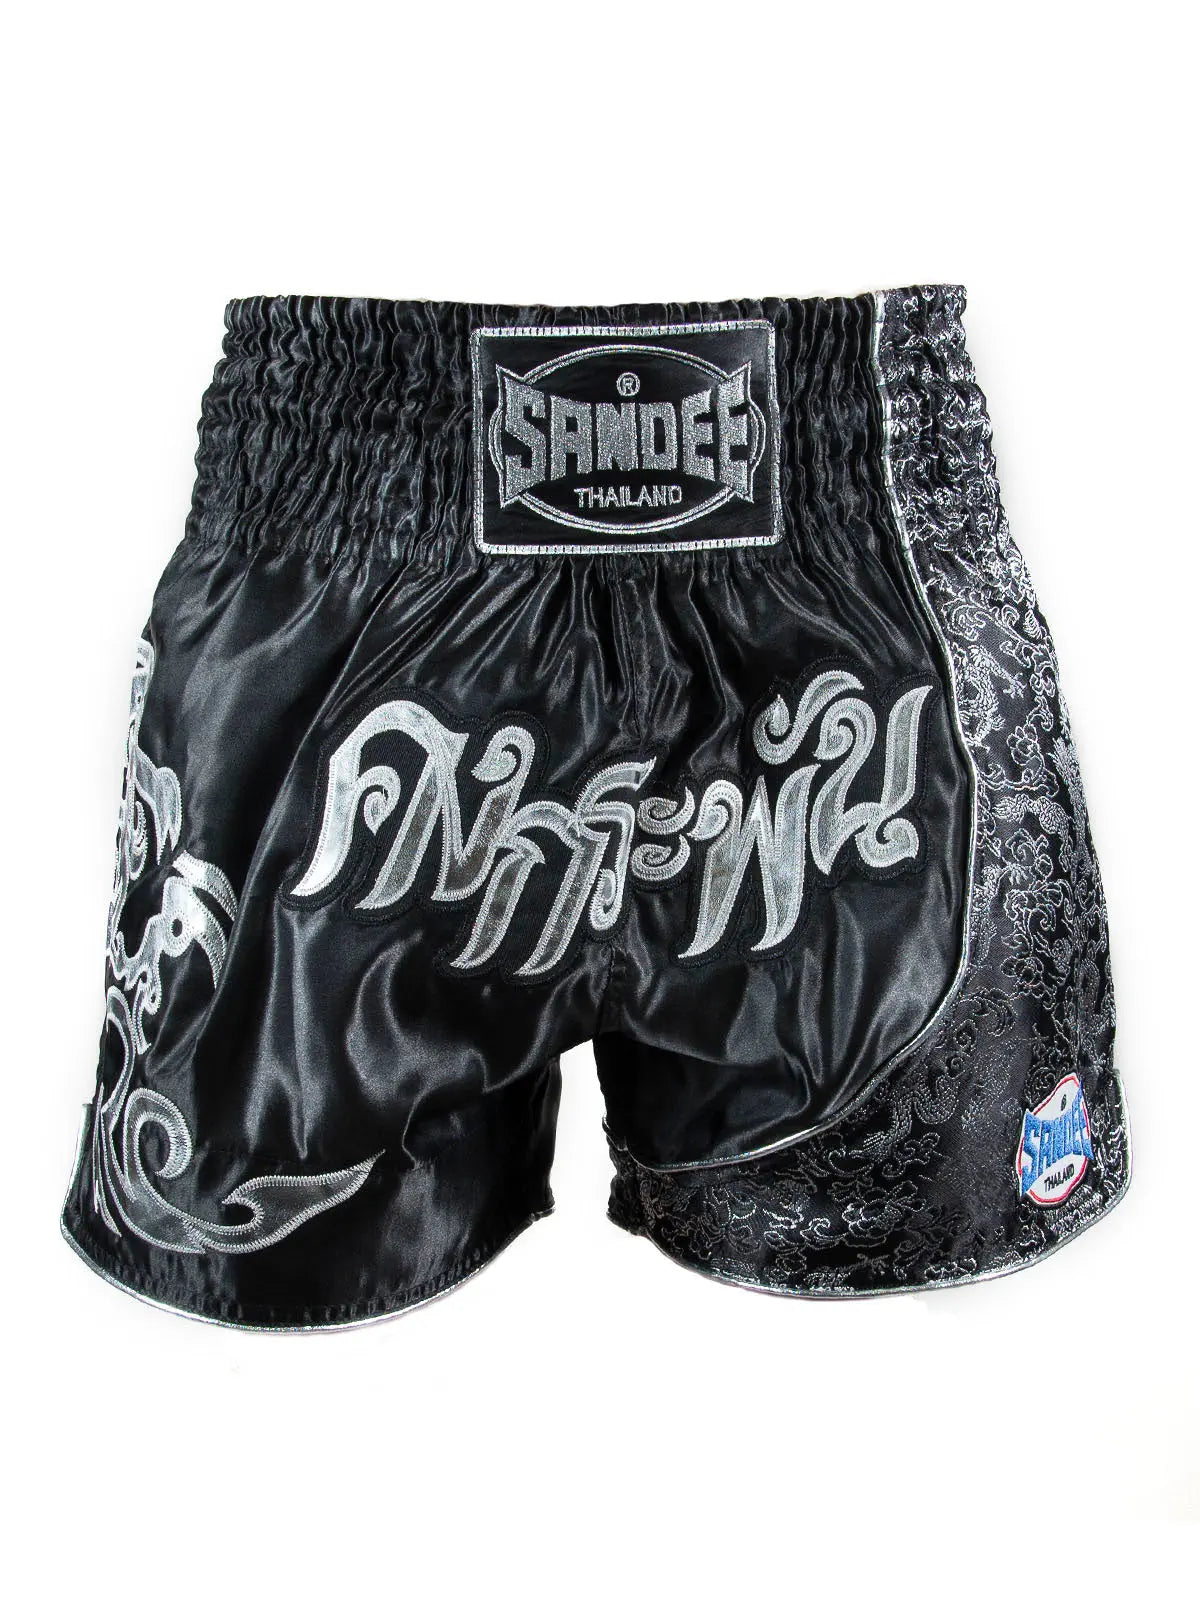 Sandee Unbreakable Thai Shorts Sandee